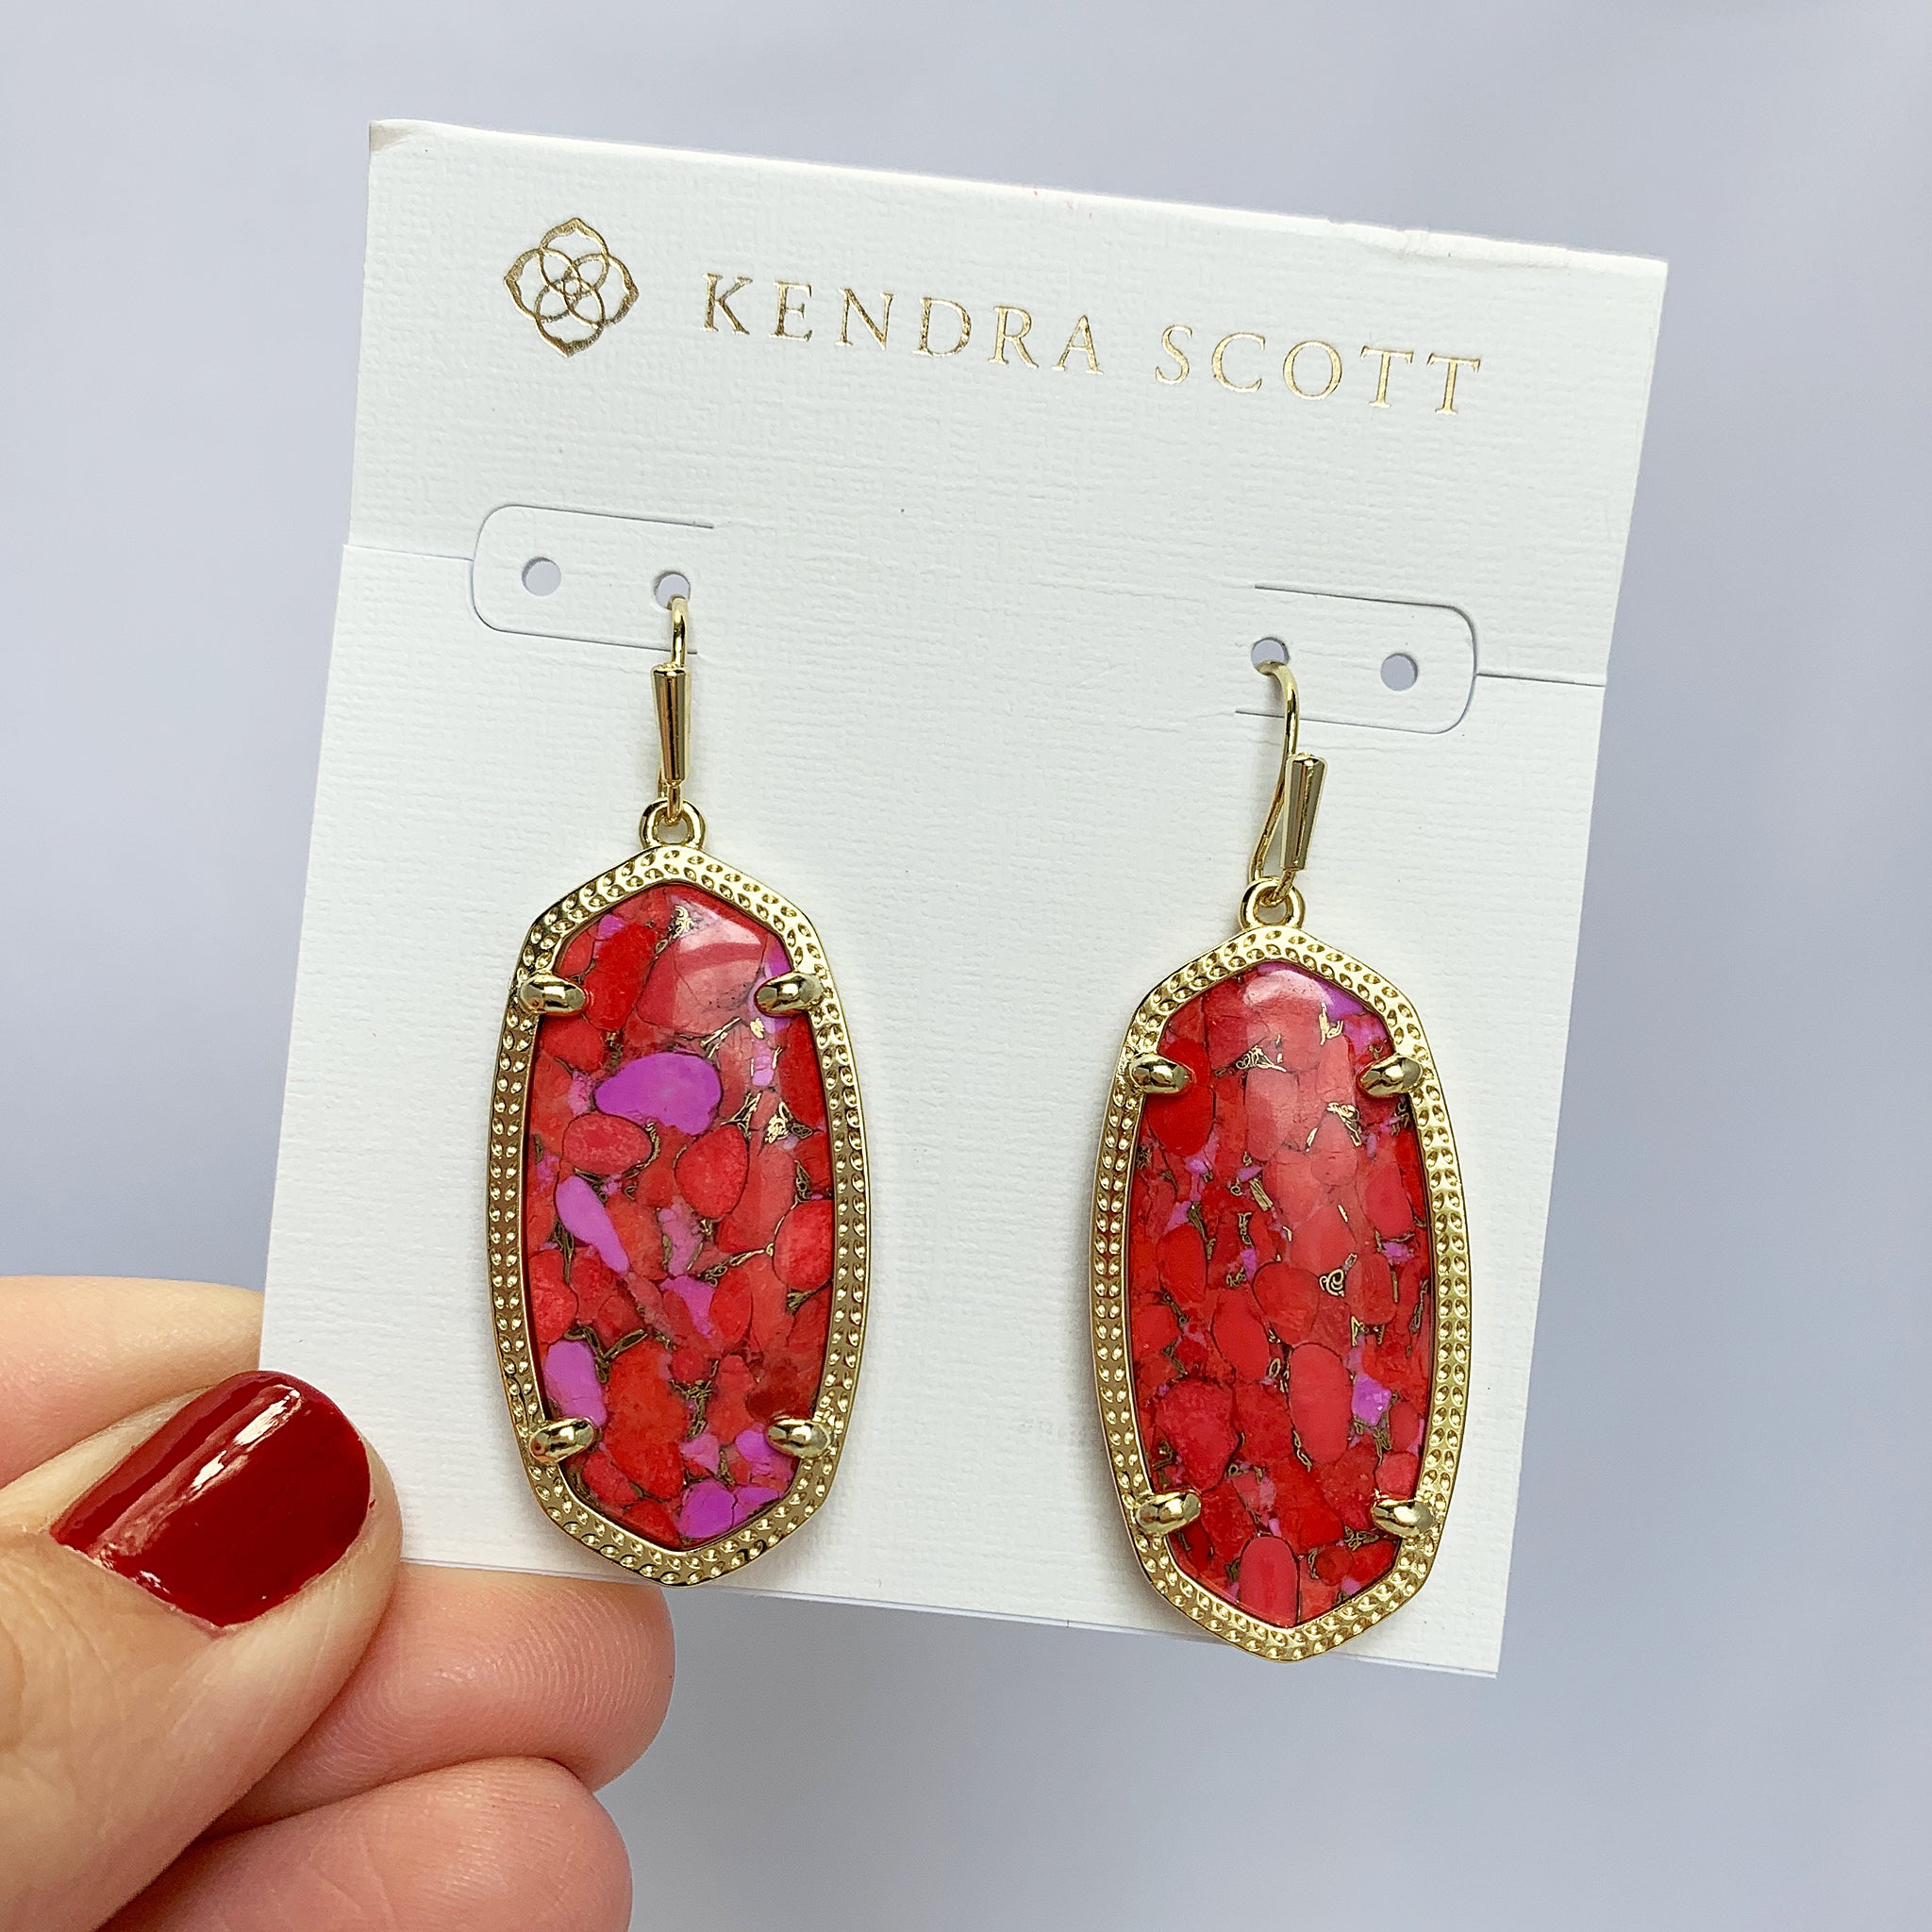 Kendra Scott Elle Oval Dangle Earrings in Bronze Veined Red and Fuchsia Magnesite